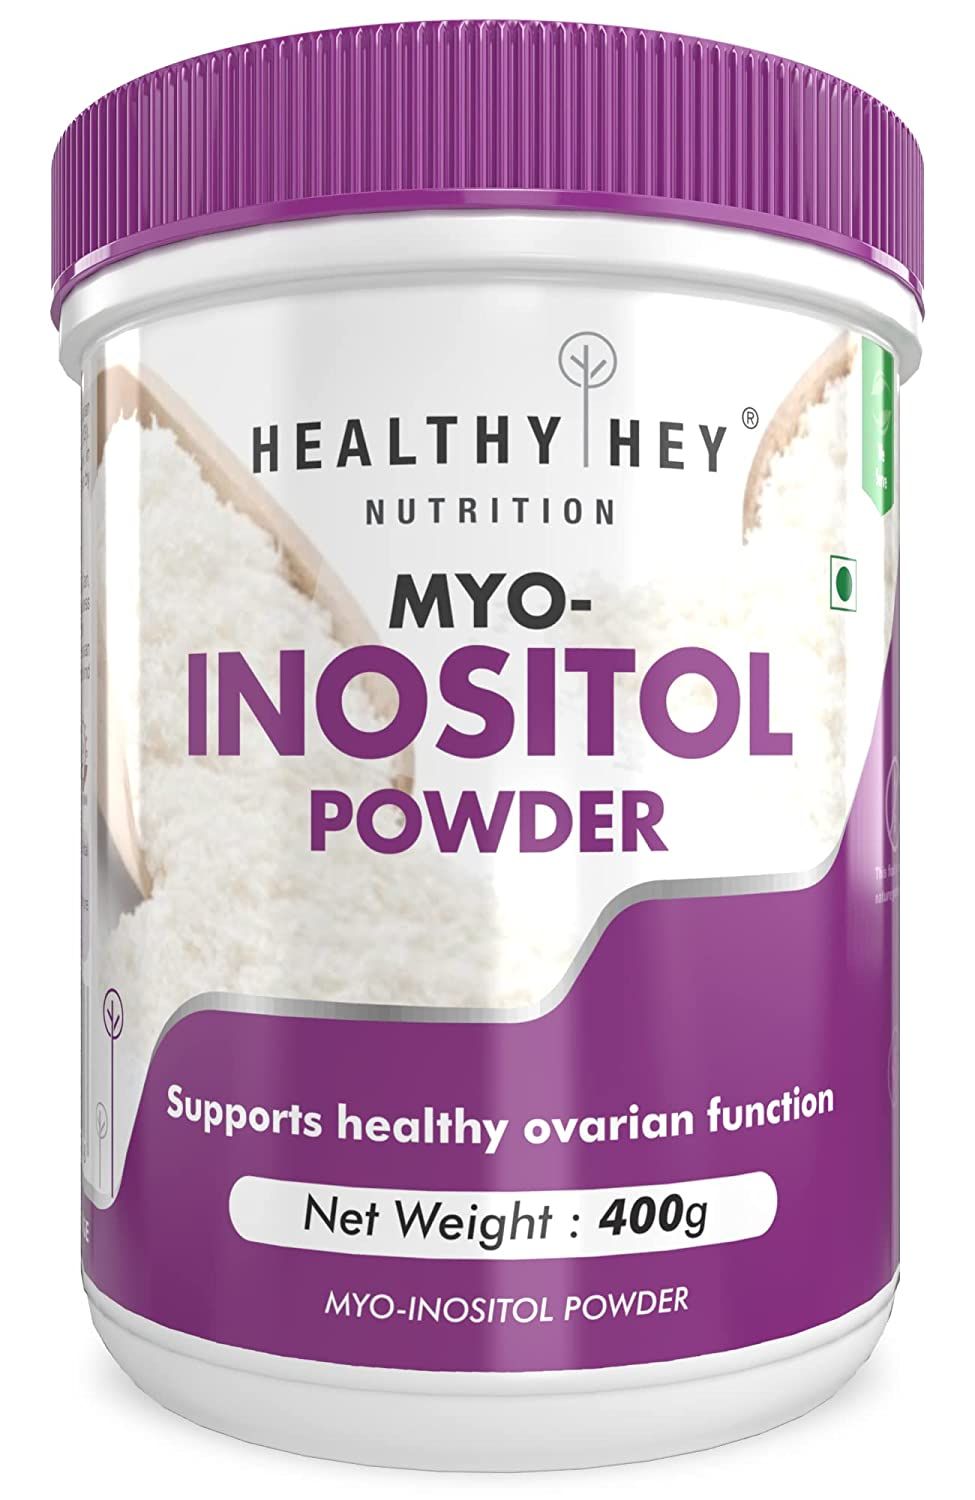 HealthyHey Nutrition Myo Inositol Powder Image